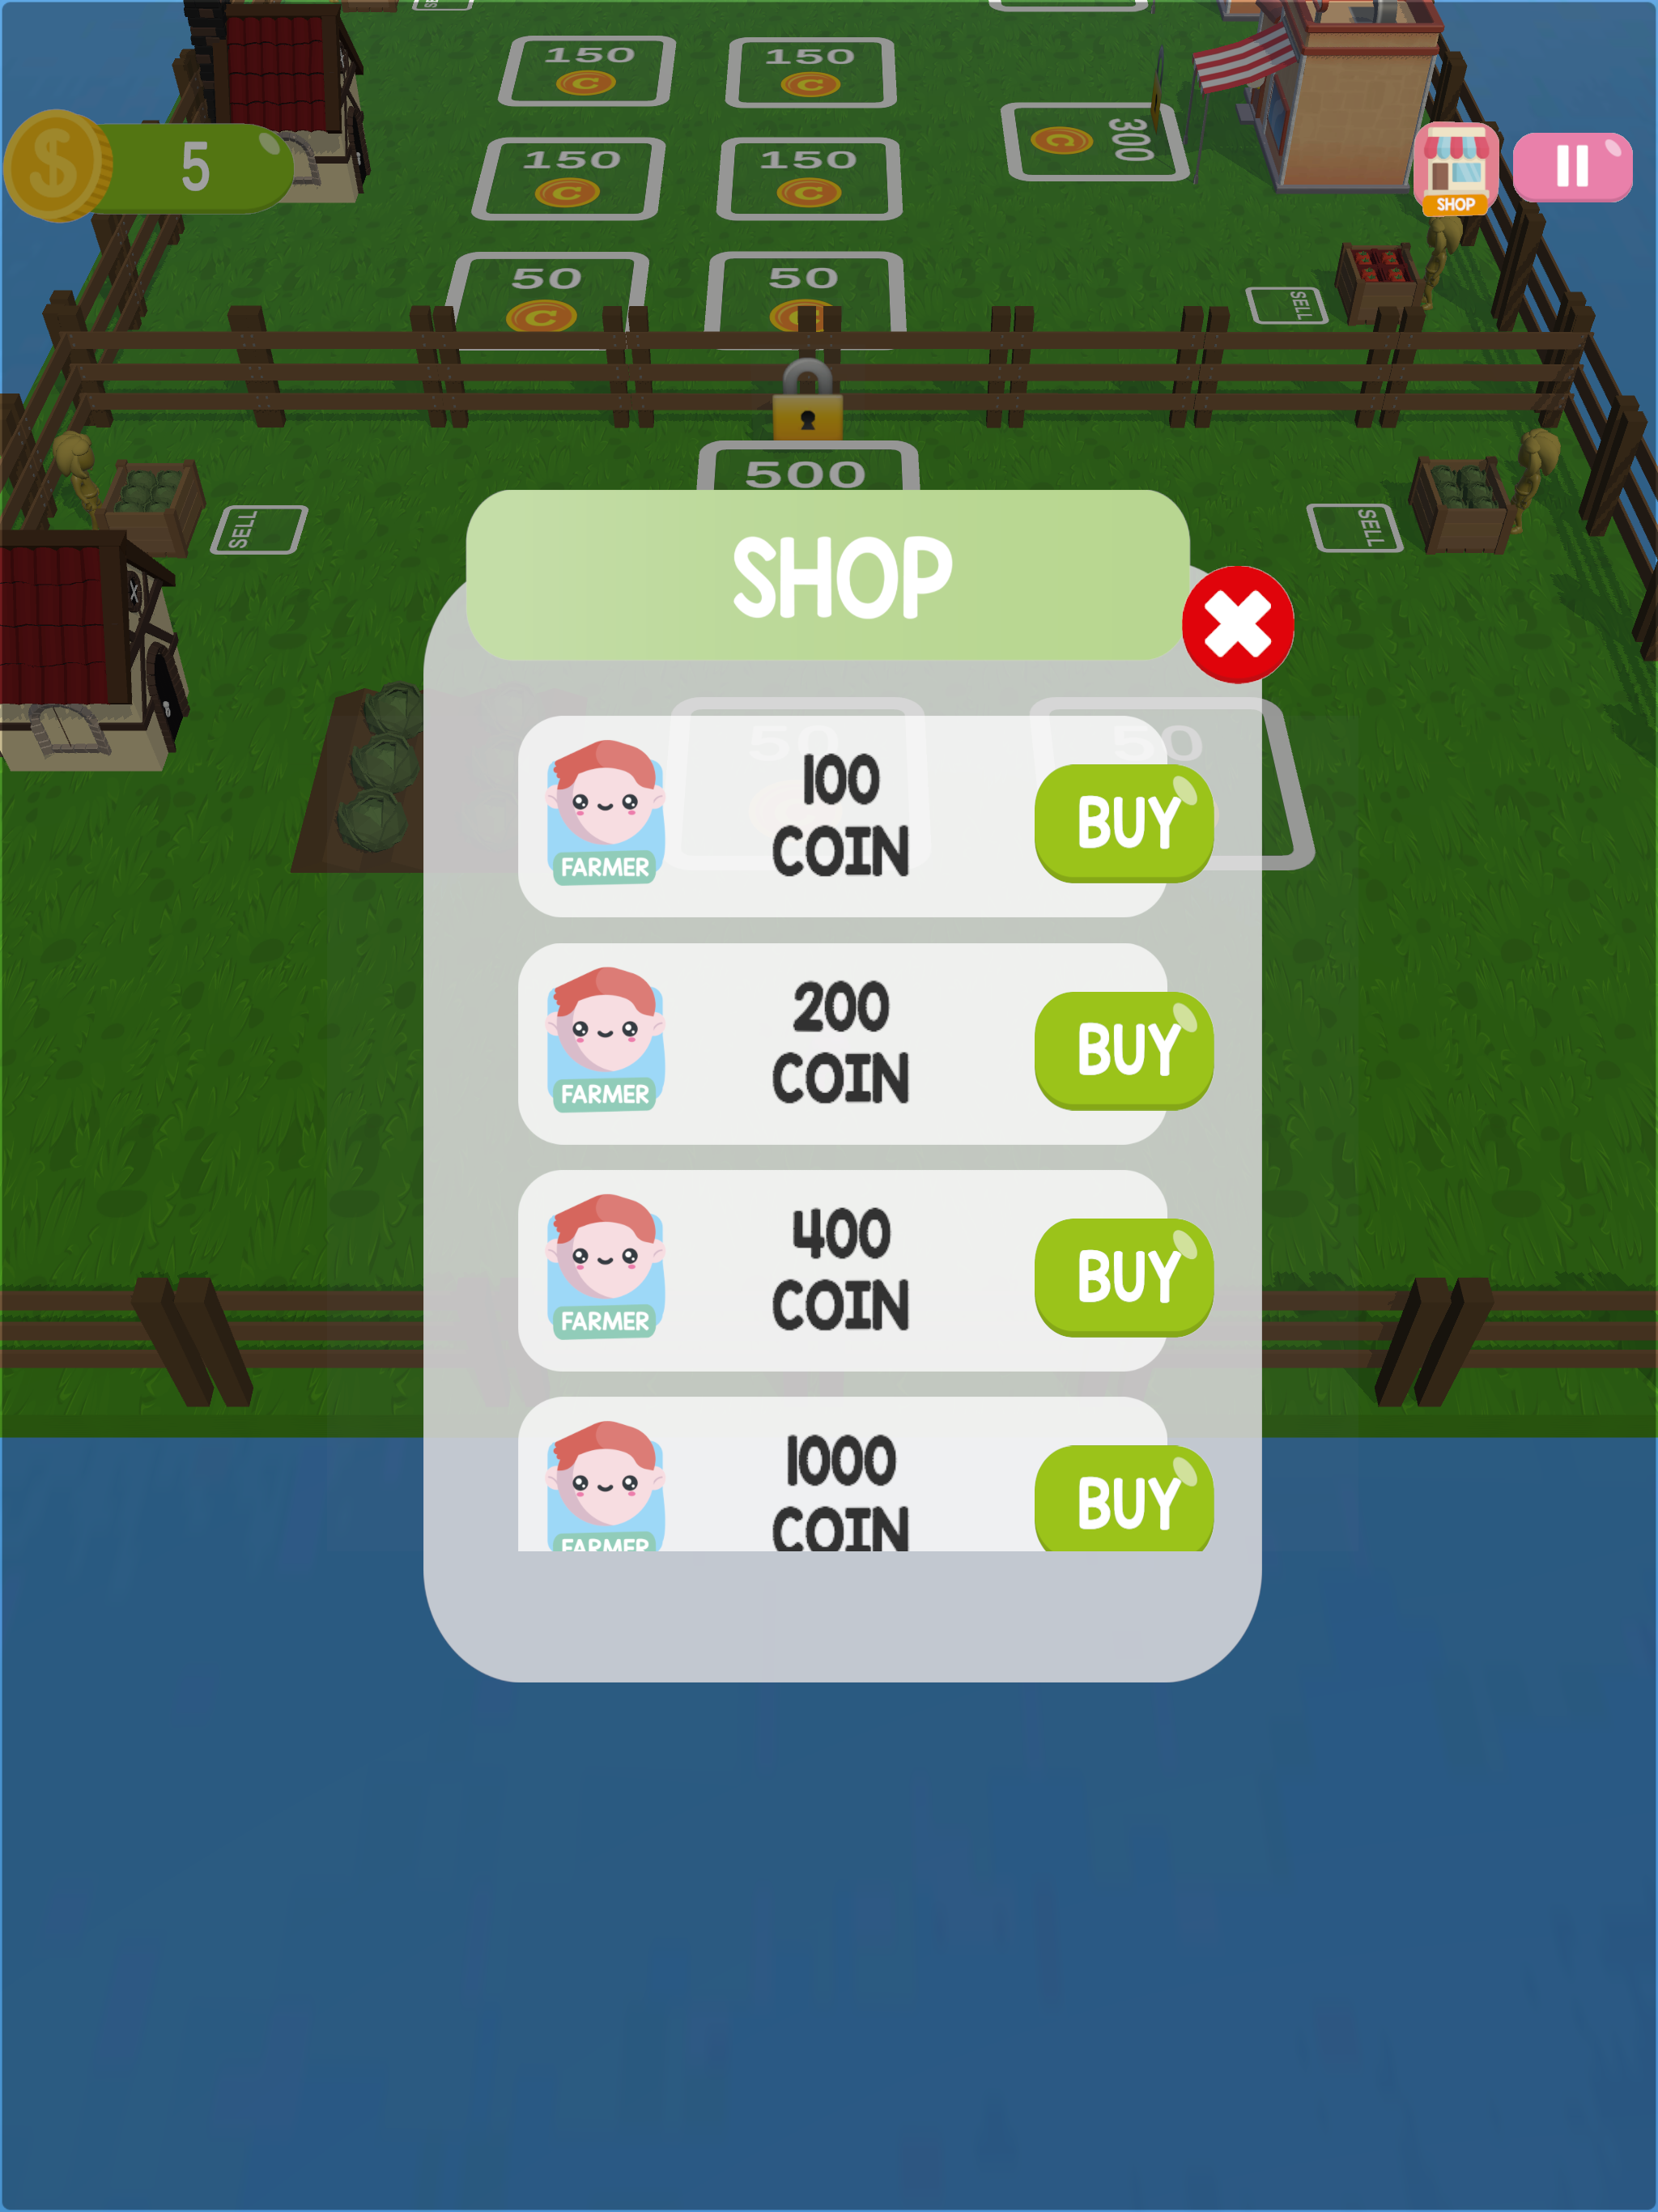 Fun Farm Frenzy screenshot game